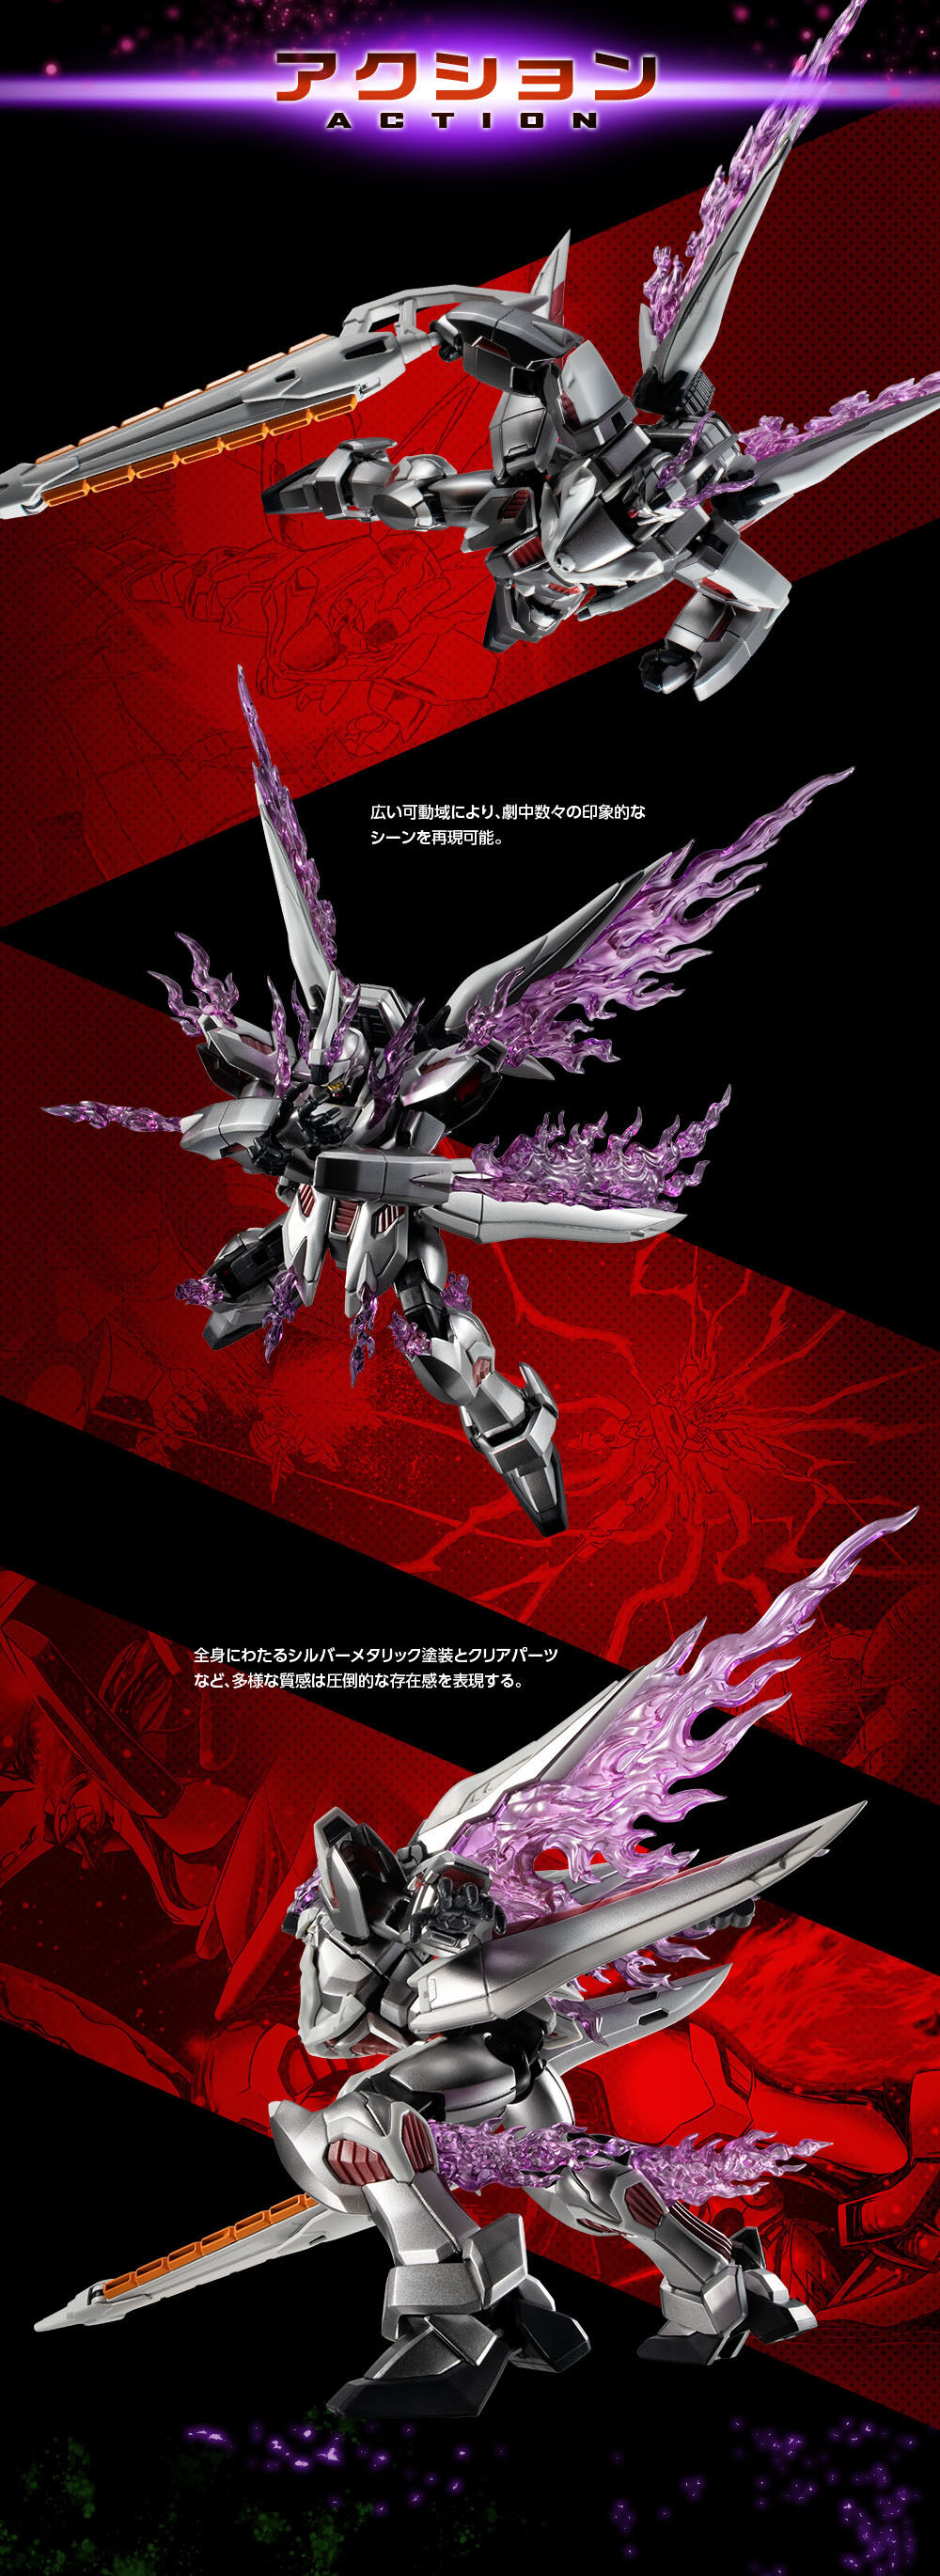 Robot Spirits(Side MS) R-SP XM-XX Ghost Gundam